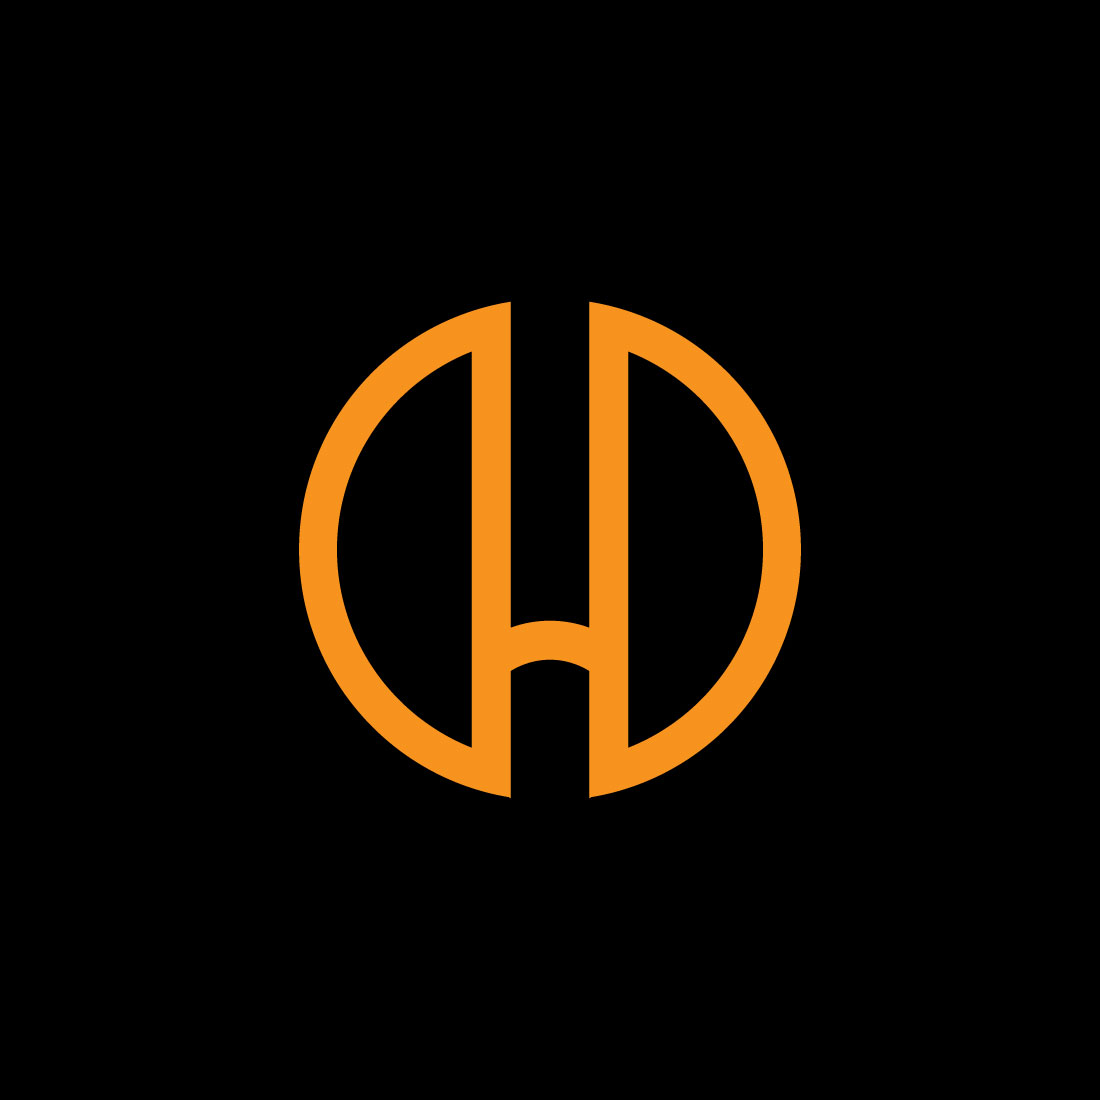 Simple H Letter Logo Design cover image.